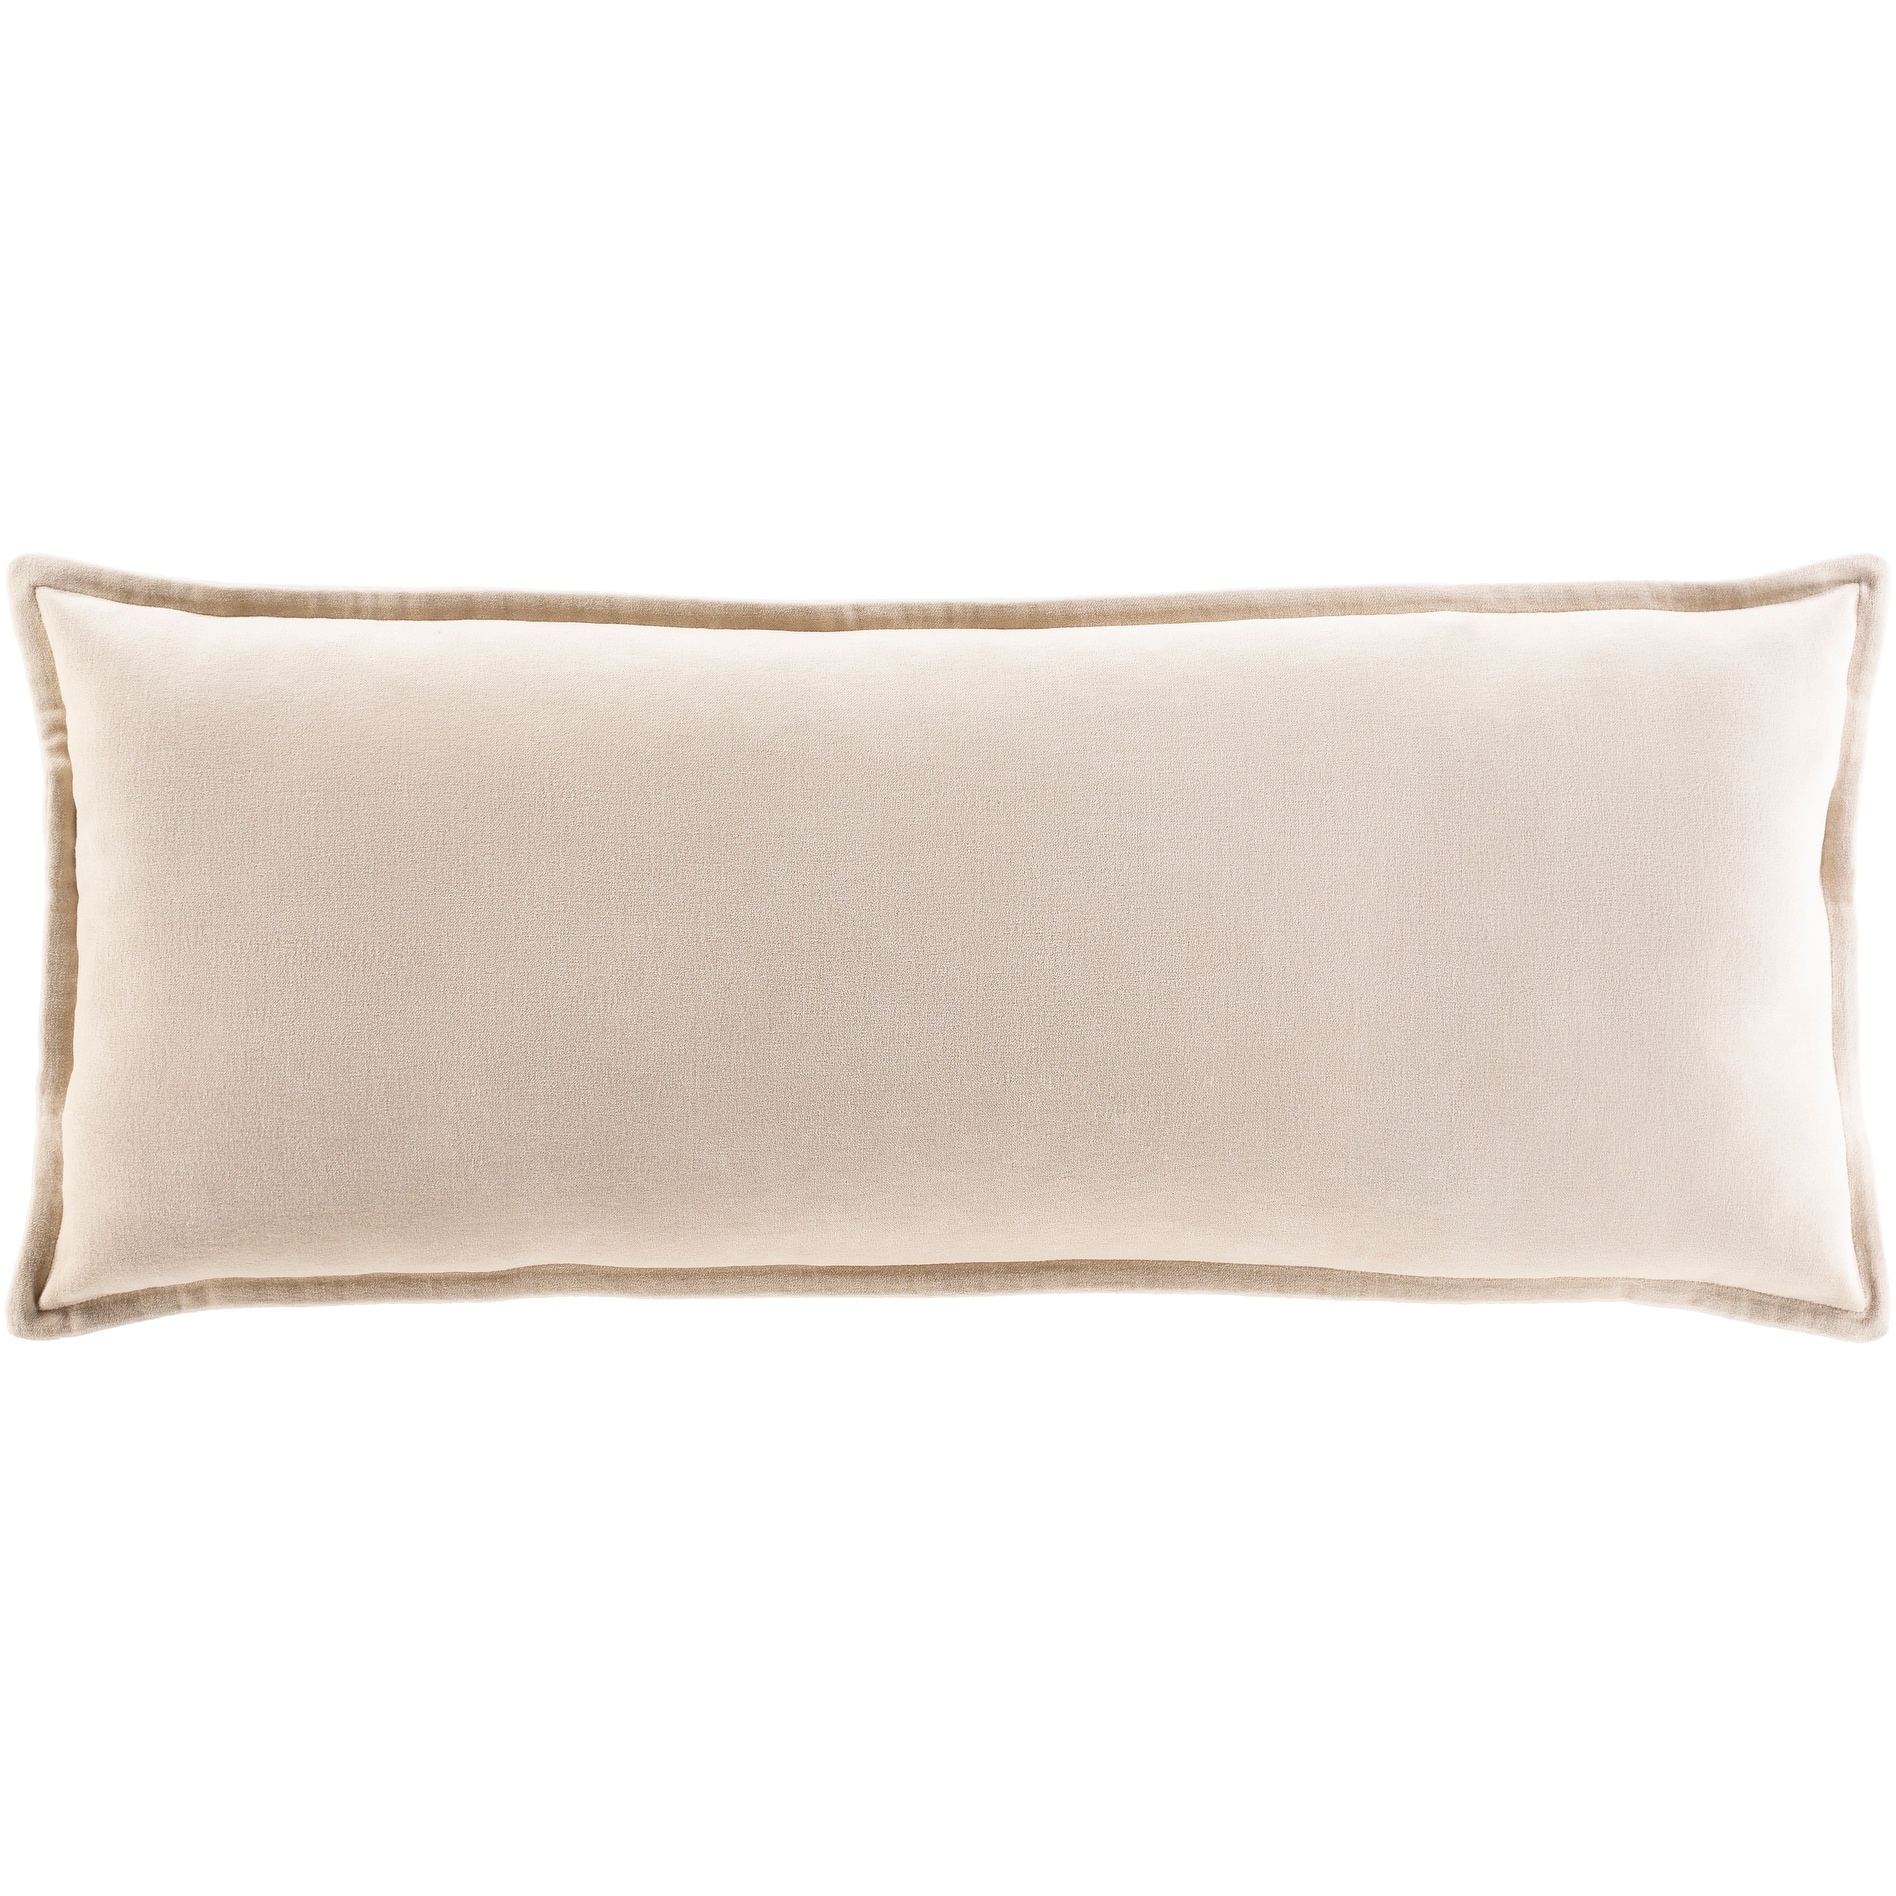 90's Retro Pattern Lumbar Pillow - Bed Bath & Beyond - 28416248